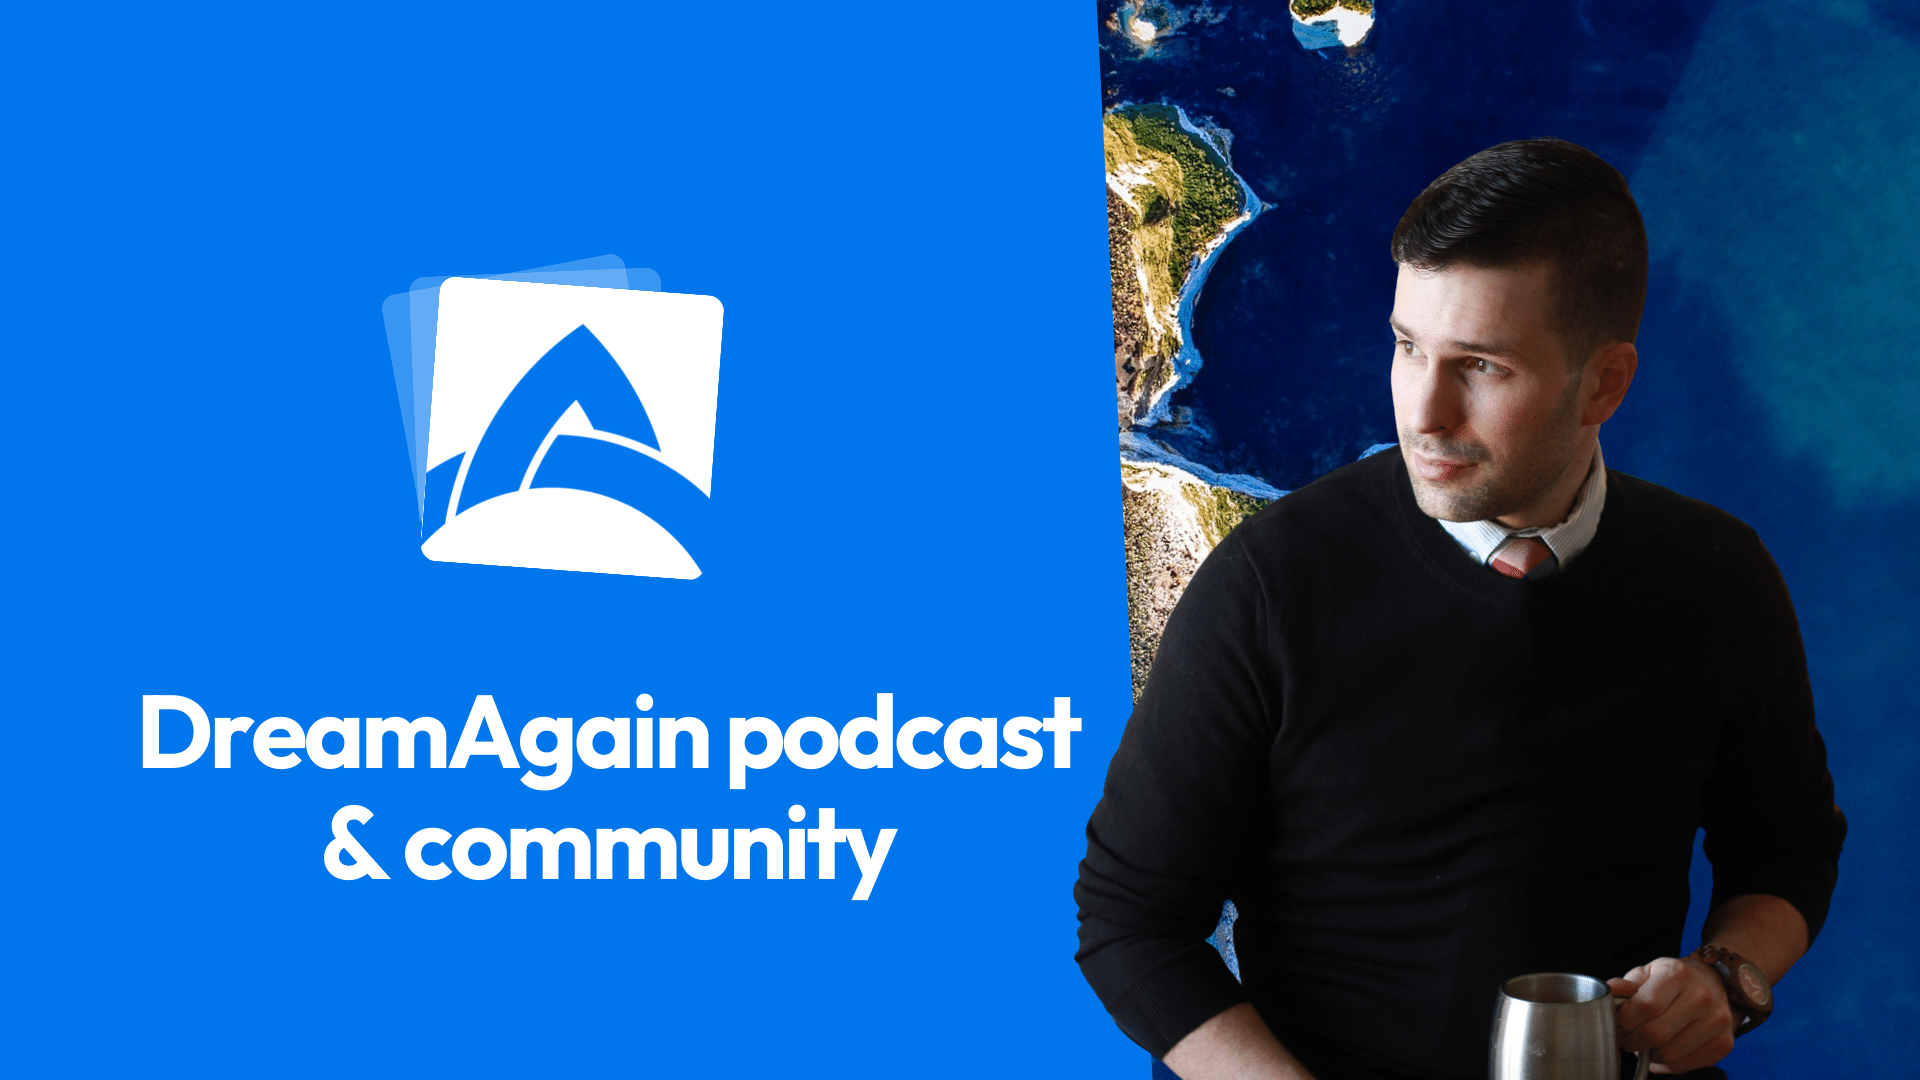 The DreamAgain Podcast & Community